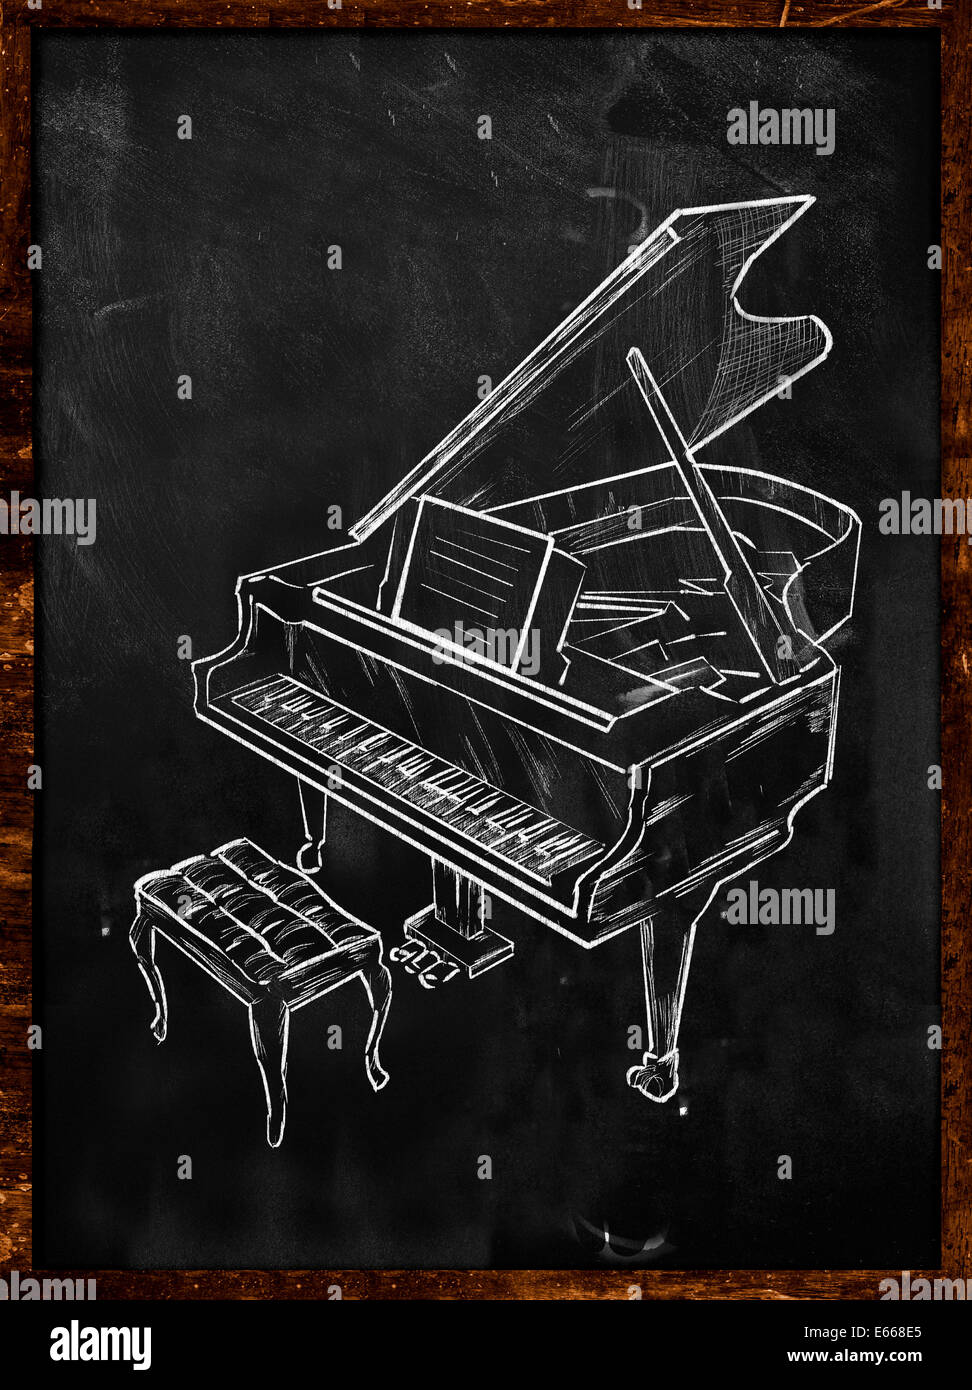 Grand Piano Drawing on Blackboard music background Stock Photo - Alamy